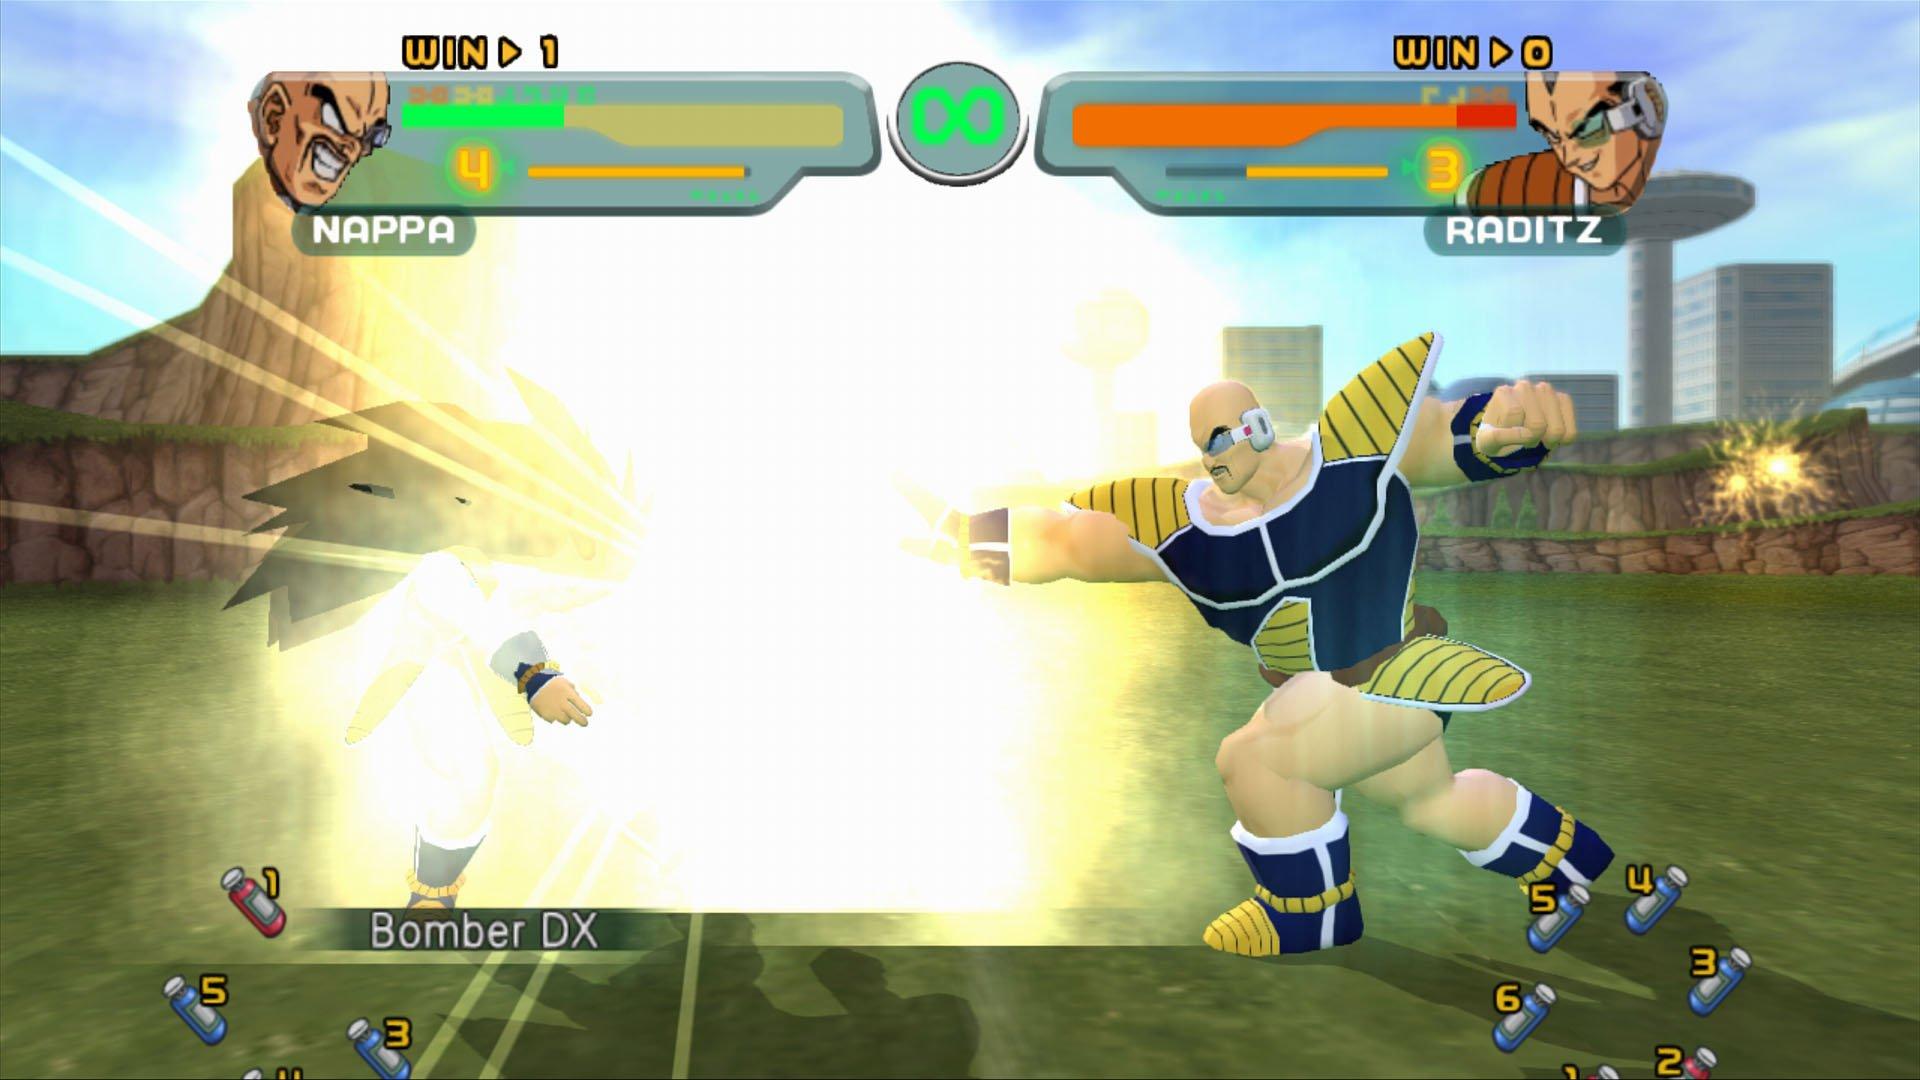 Dragon Ball Z Budokai Tenkaichi 3 Cell First Form vs Android 18 (com vs  com) Battle Gameplay 